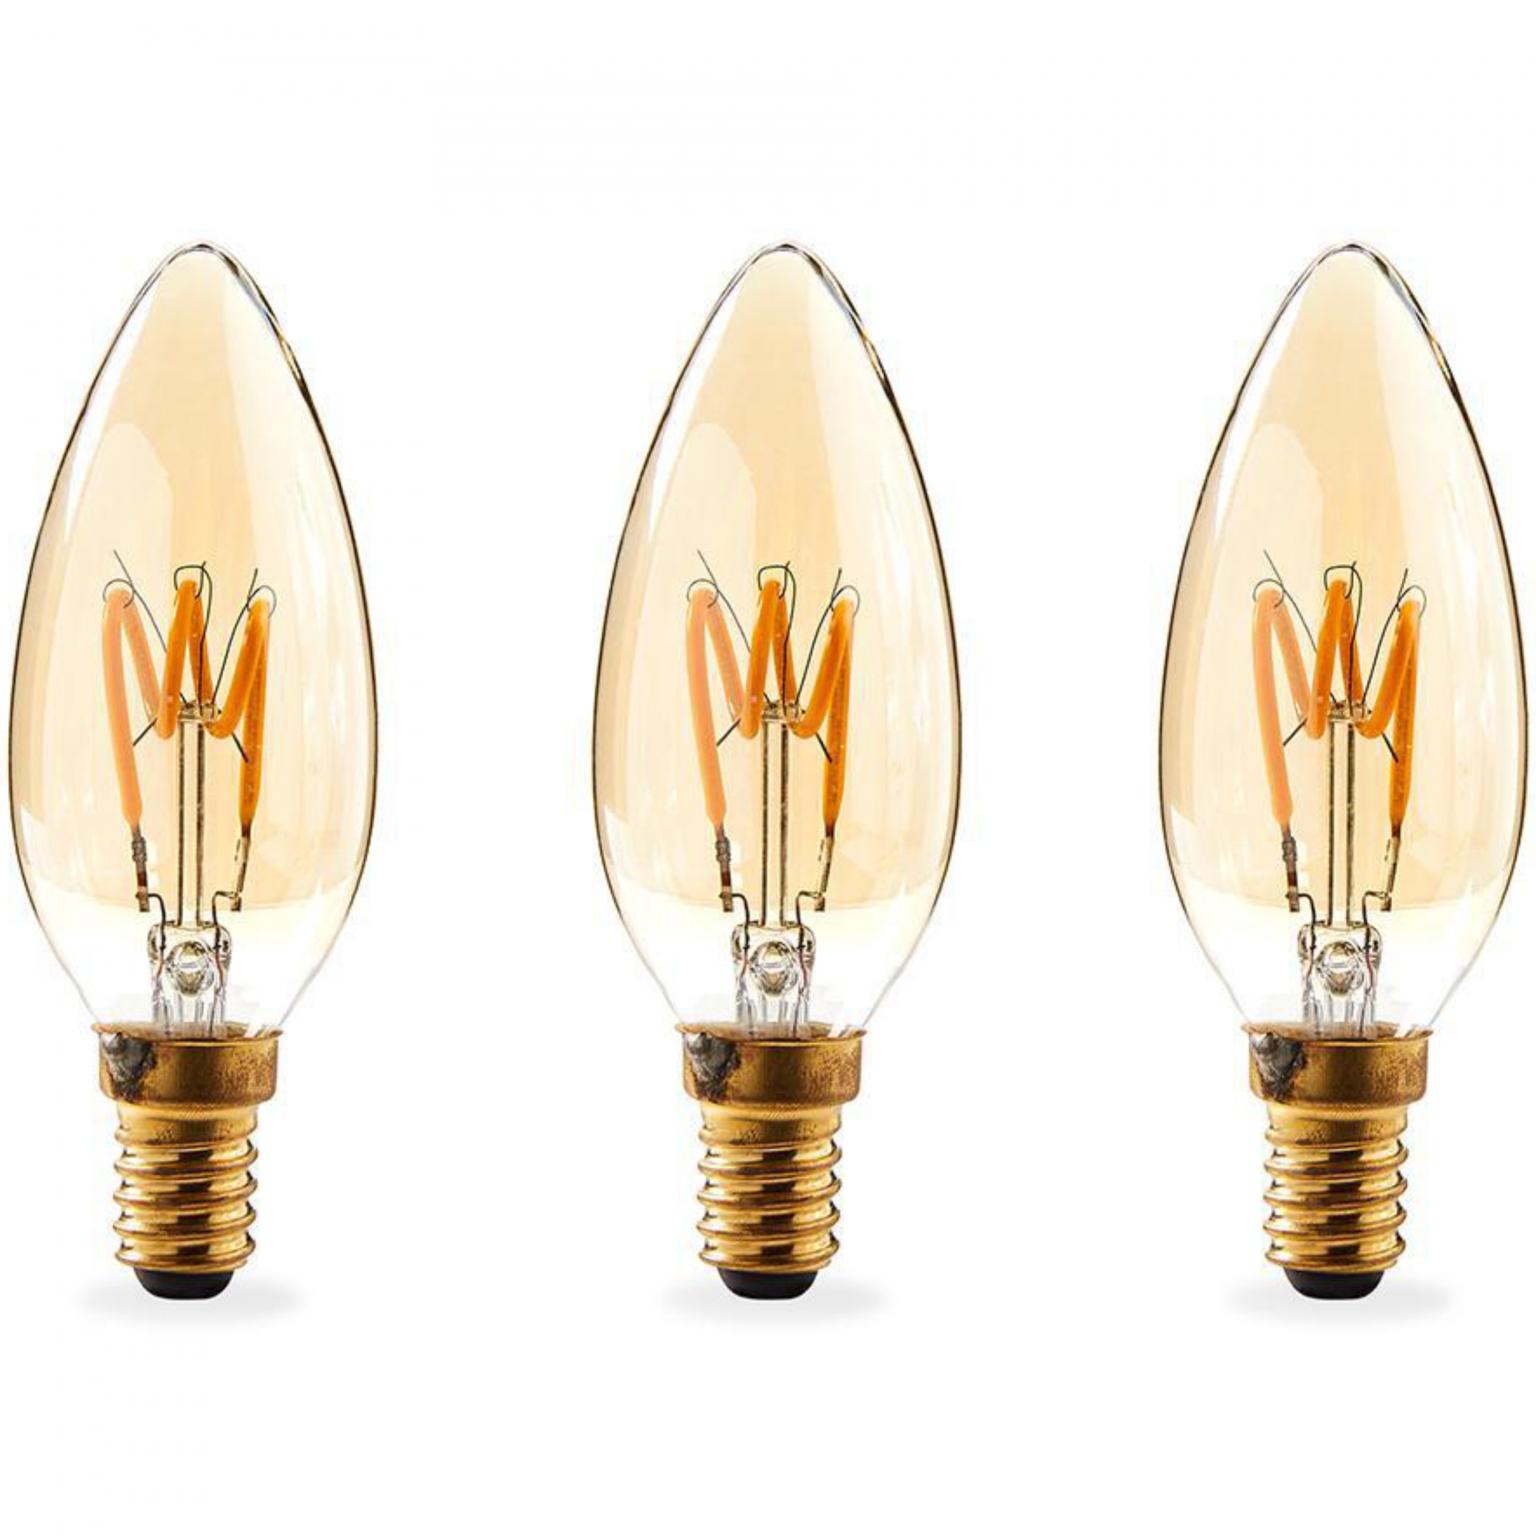 Filament LED-lamp - 100 lumen